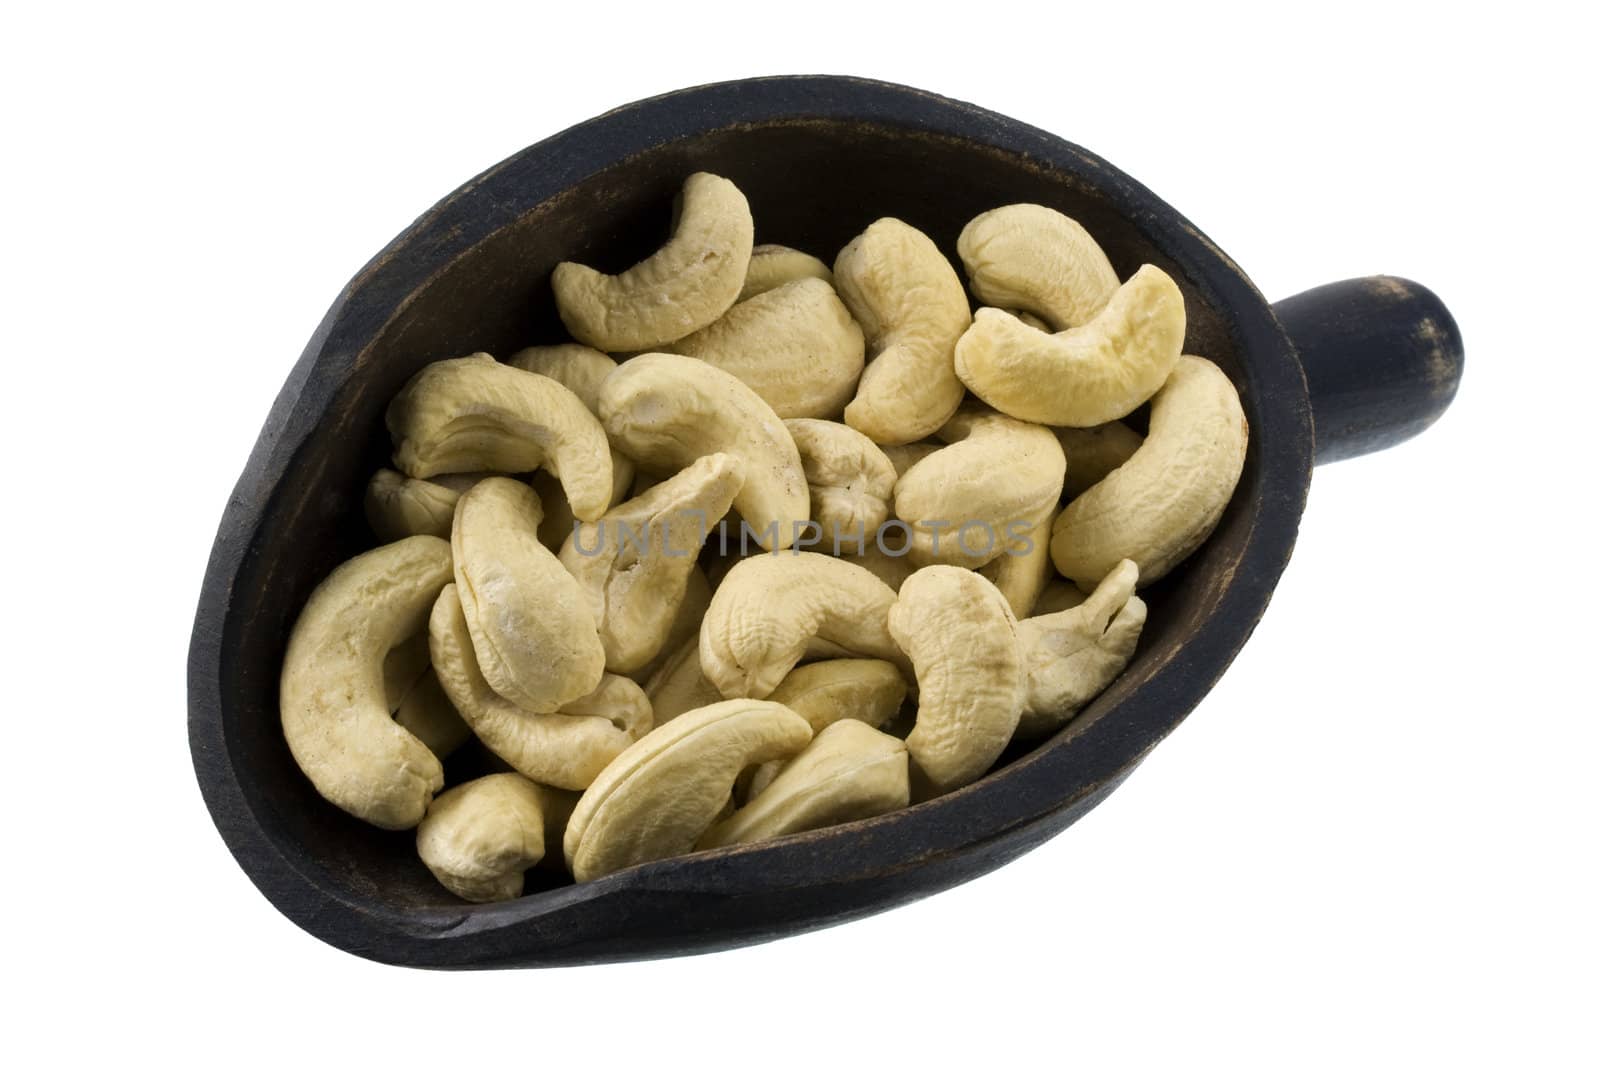 scoop of raw cashew nuts by PixelsAway